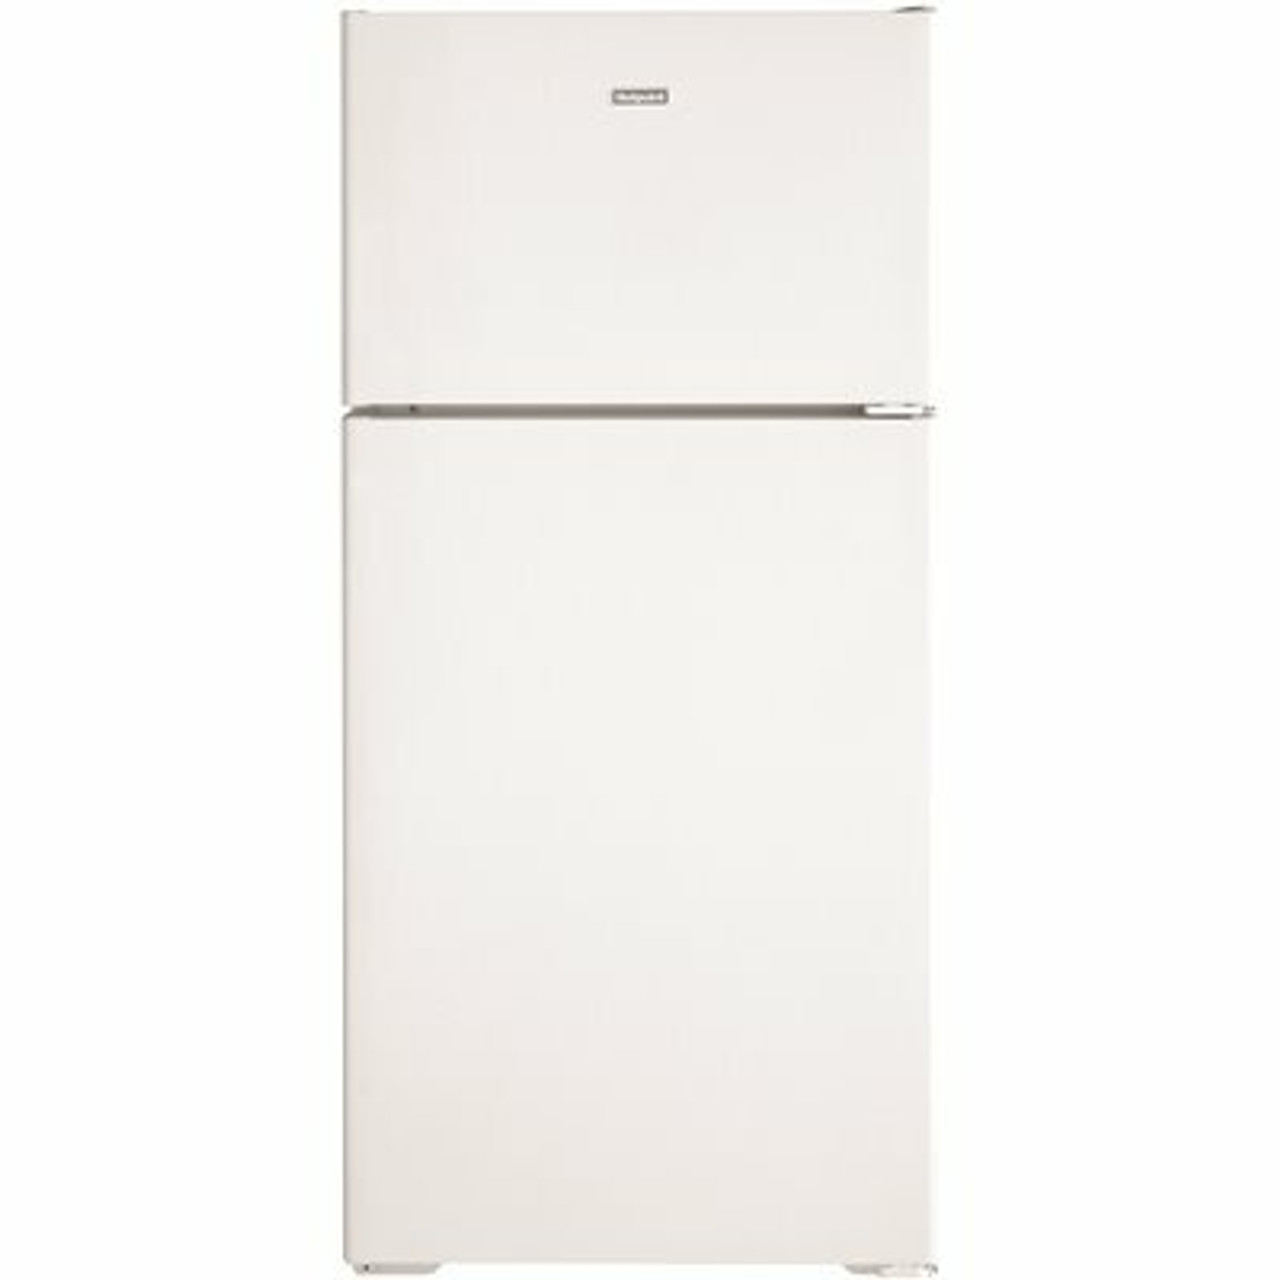 Hotpoint 15.6 Cu. Ft. Top Freezer Refrigerator In White